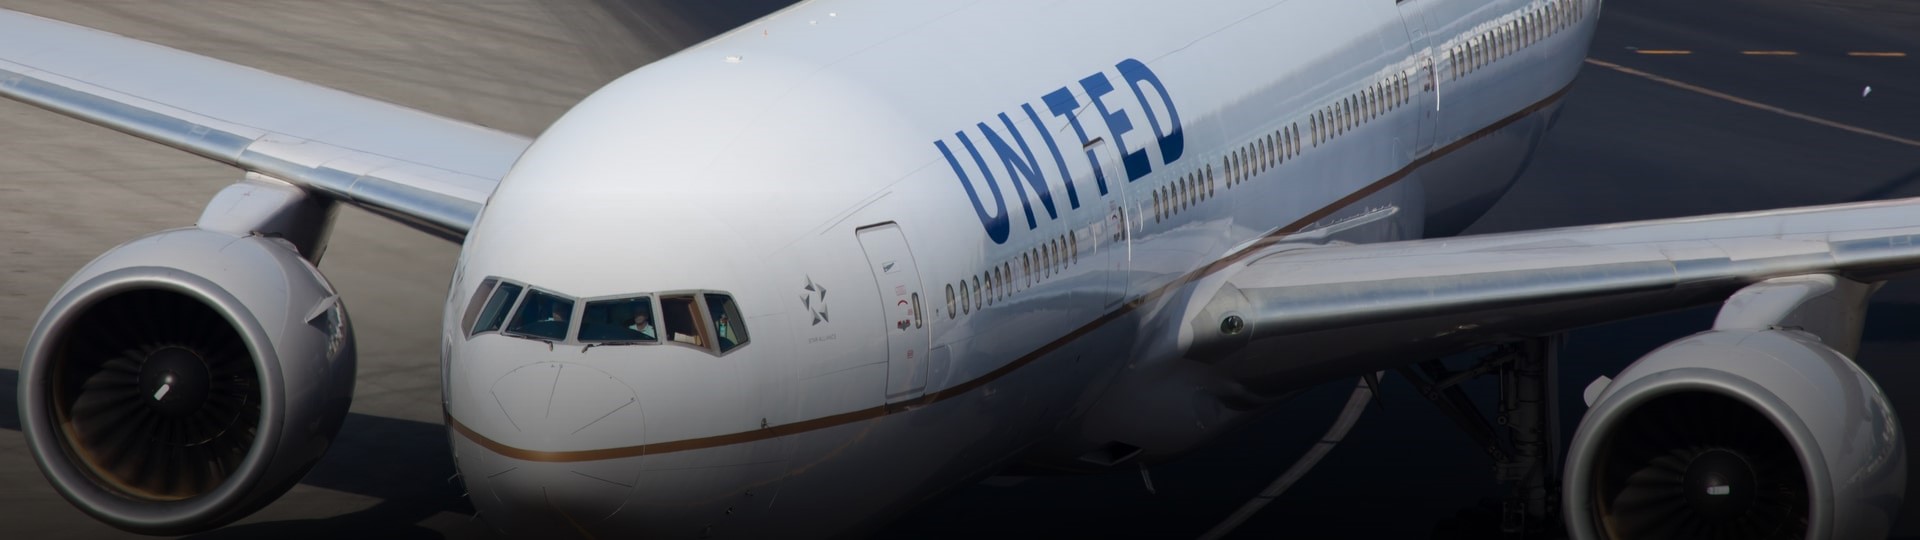 Americké aerolinky United Airlines objednaly 270 Boeingů a Airbusů